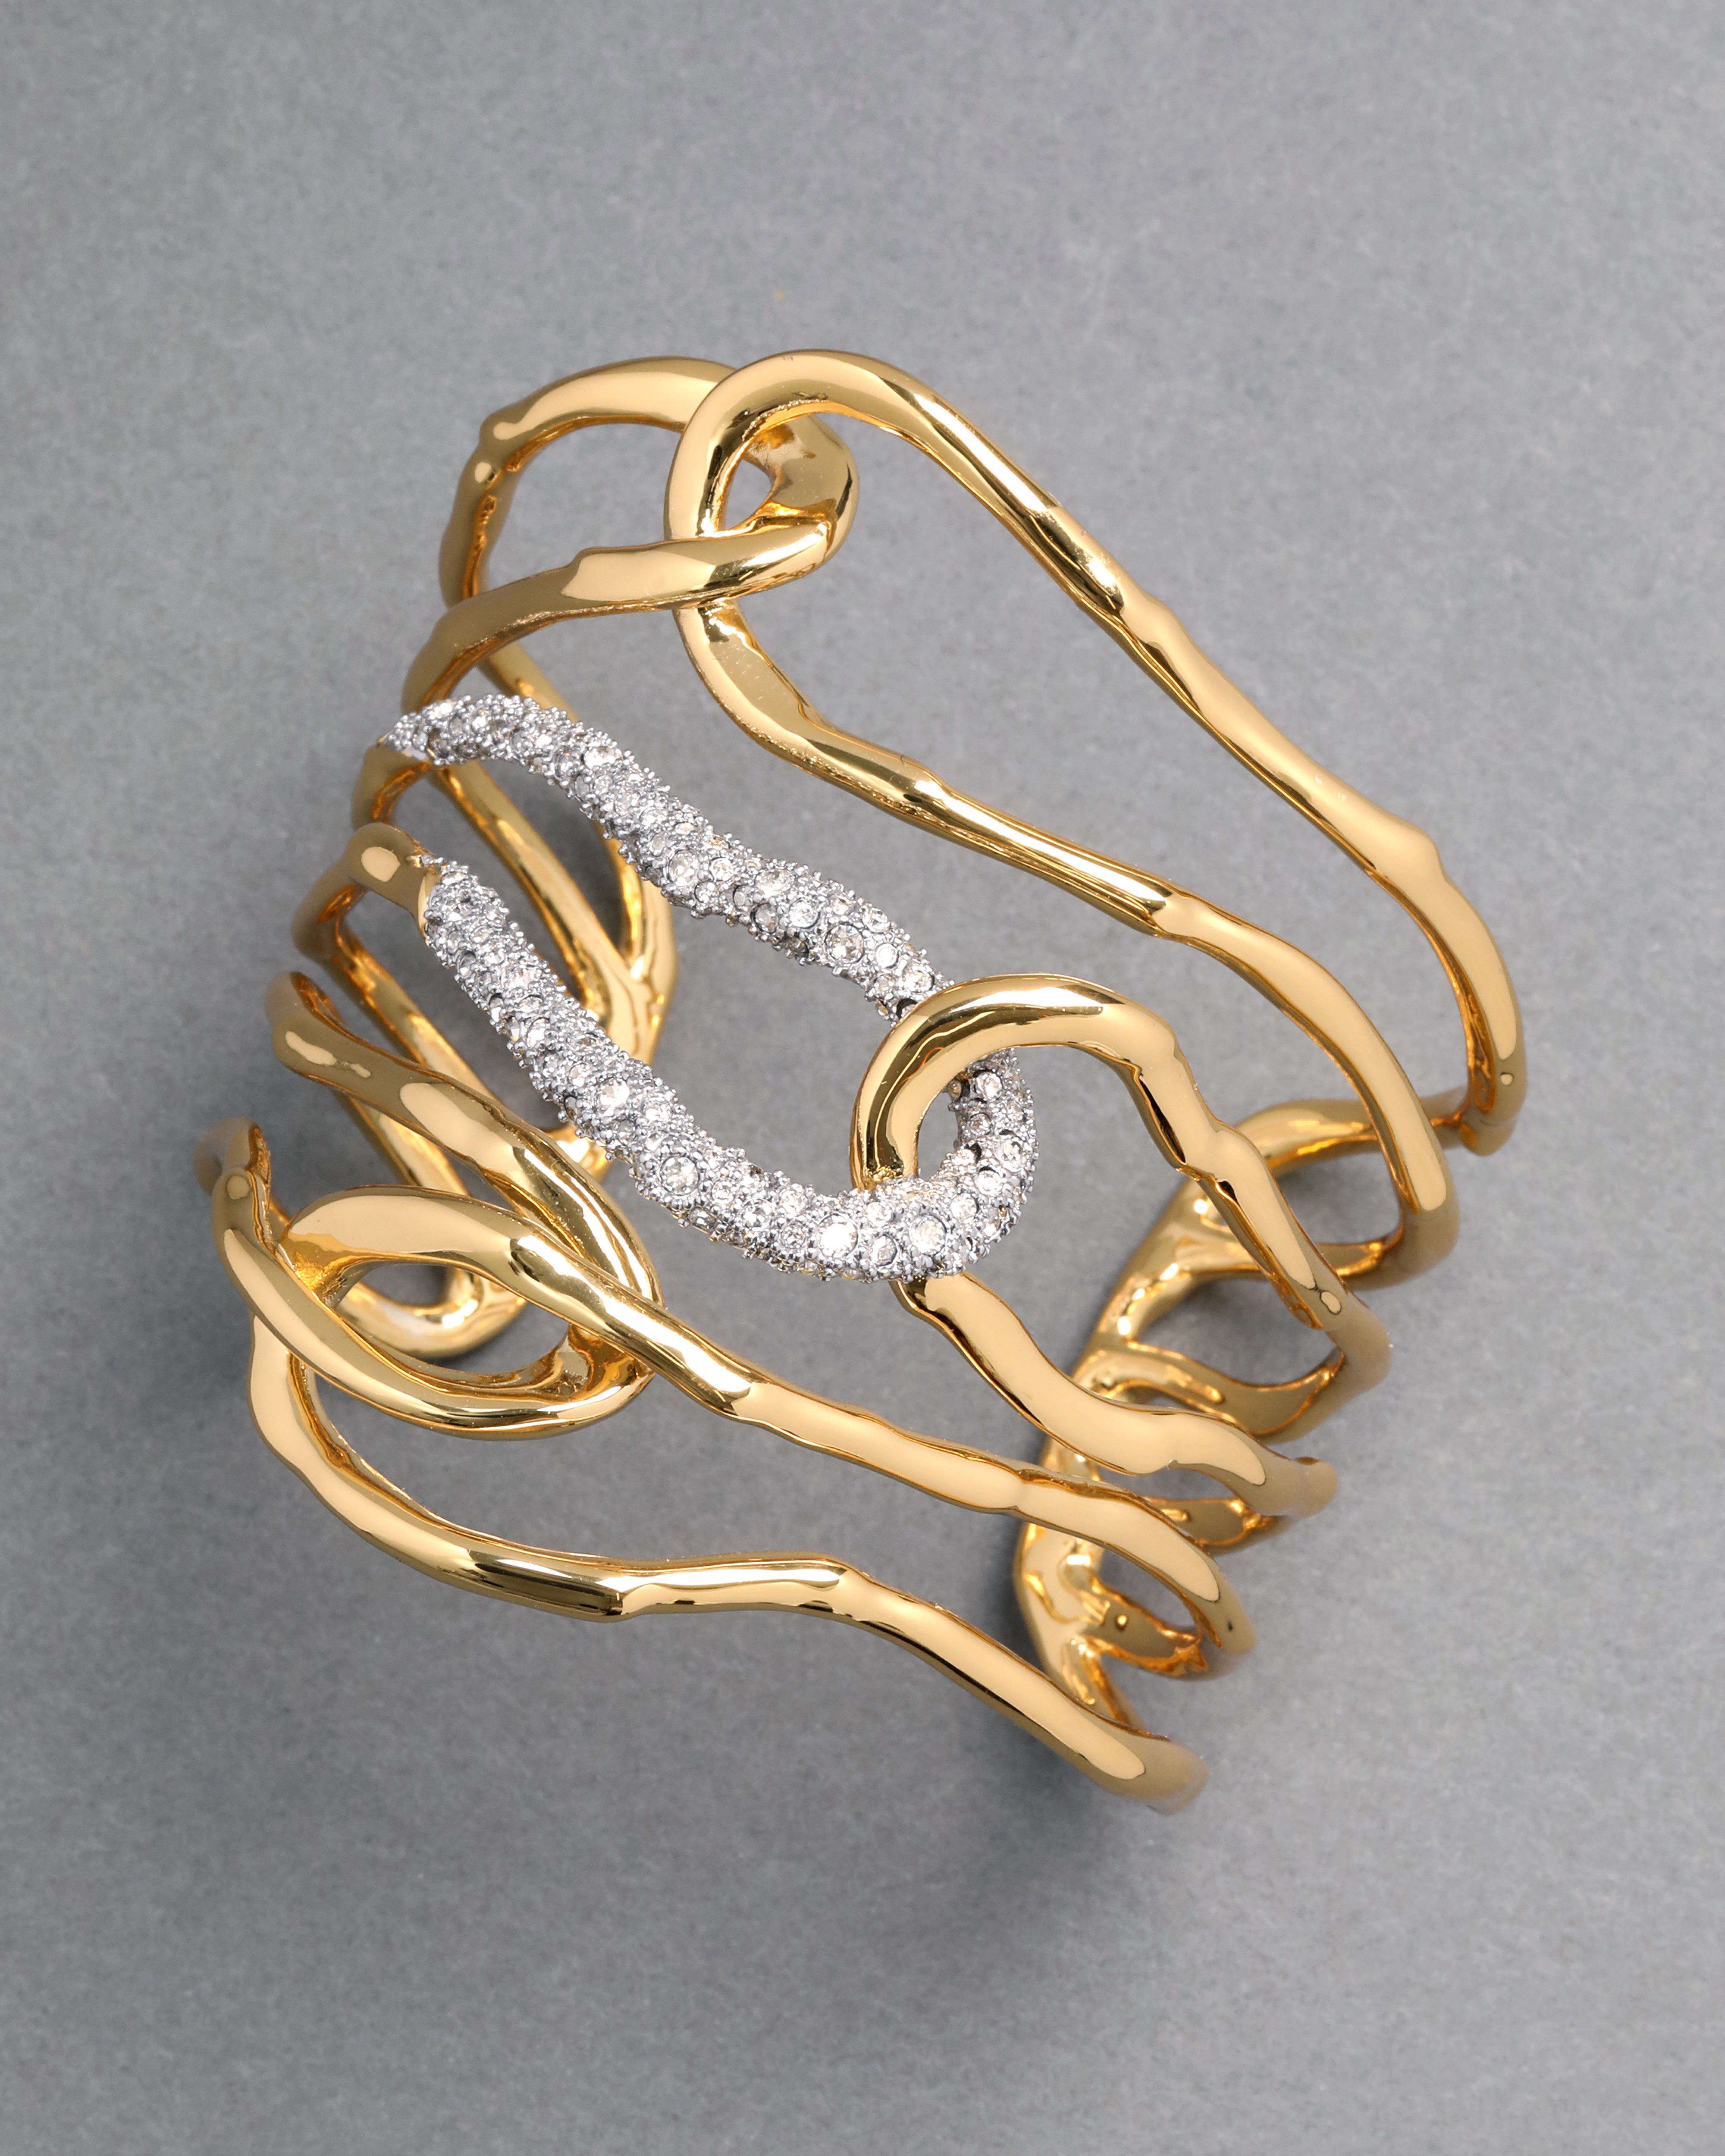 Alexis Bittar Large Molten Bangle Bracelet in Gold